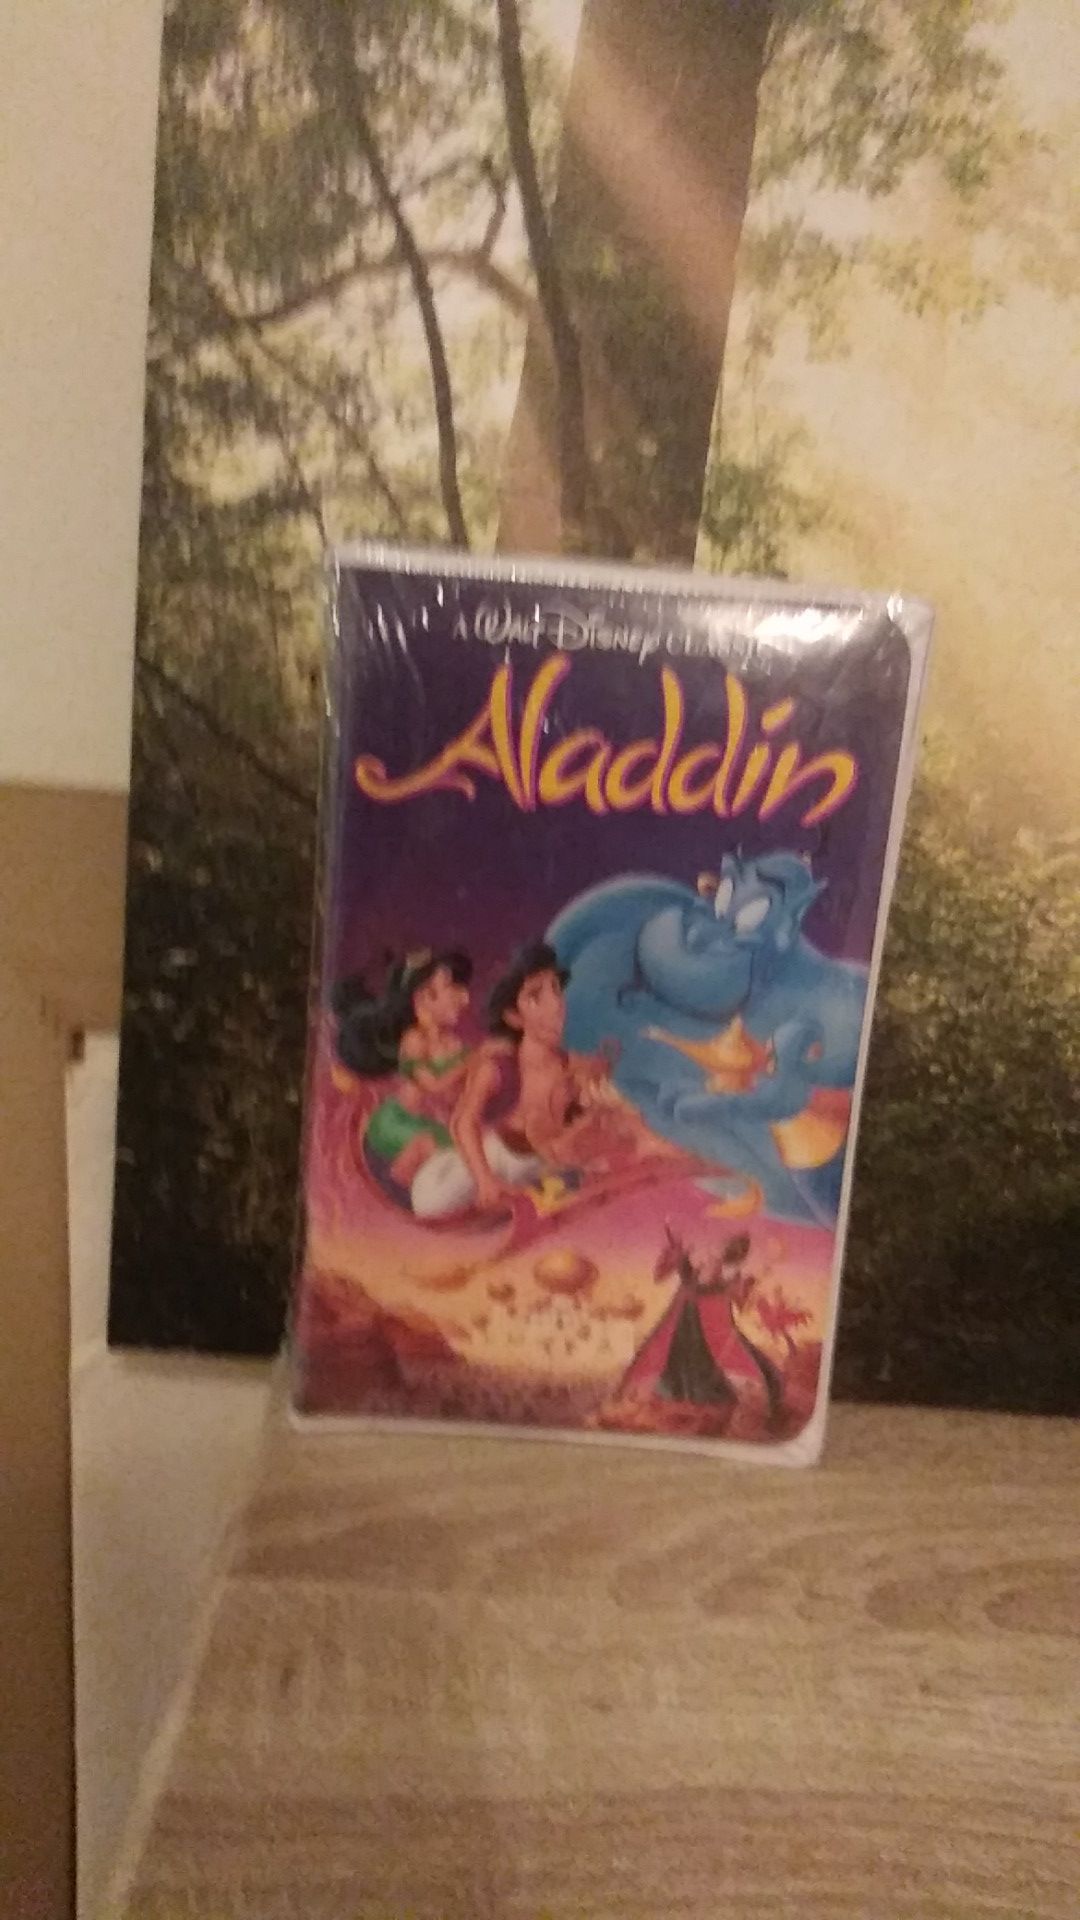 Aladdin black diamond Vhs edition sealed!